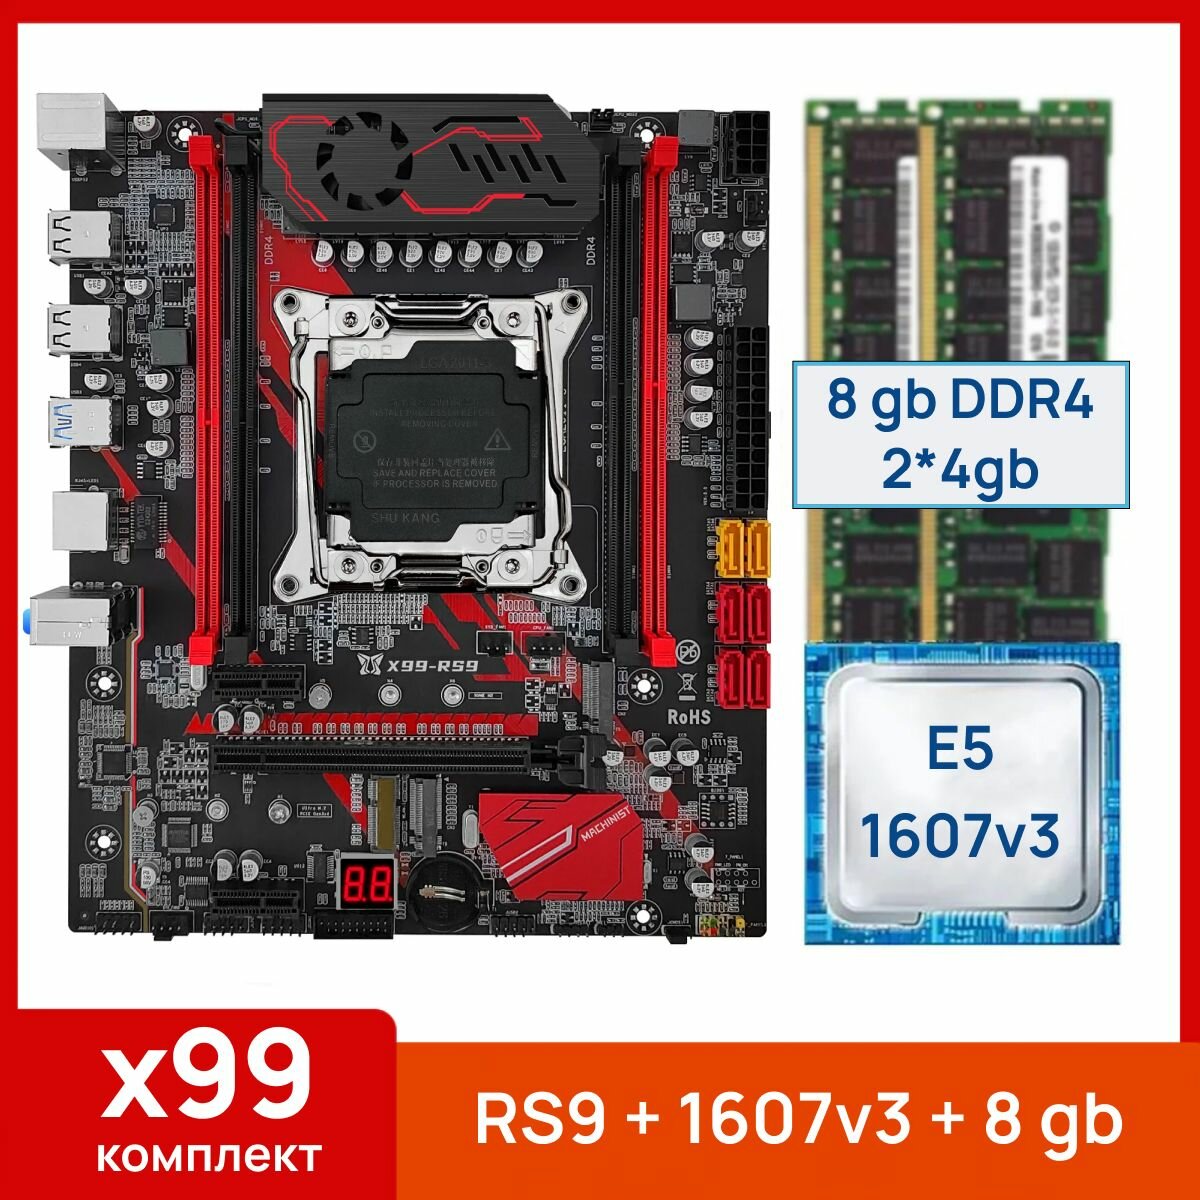 Комплект: Juxieshi/Machinist X99 RS9 + Xeon E5 1607v3 + 8 gb(2x4gb) DDR4 ecc reg